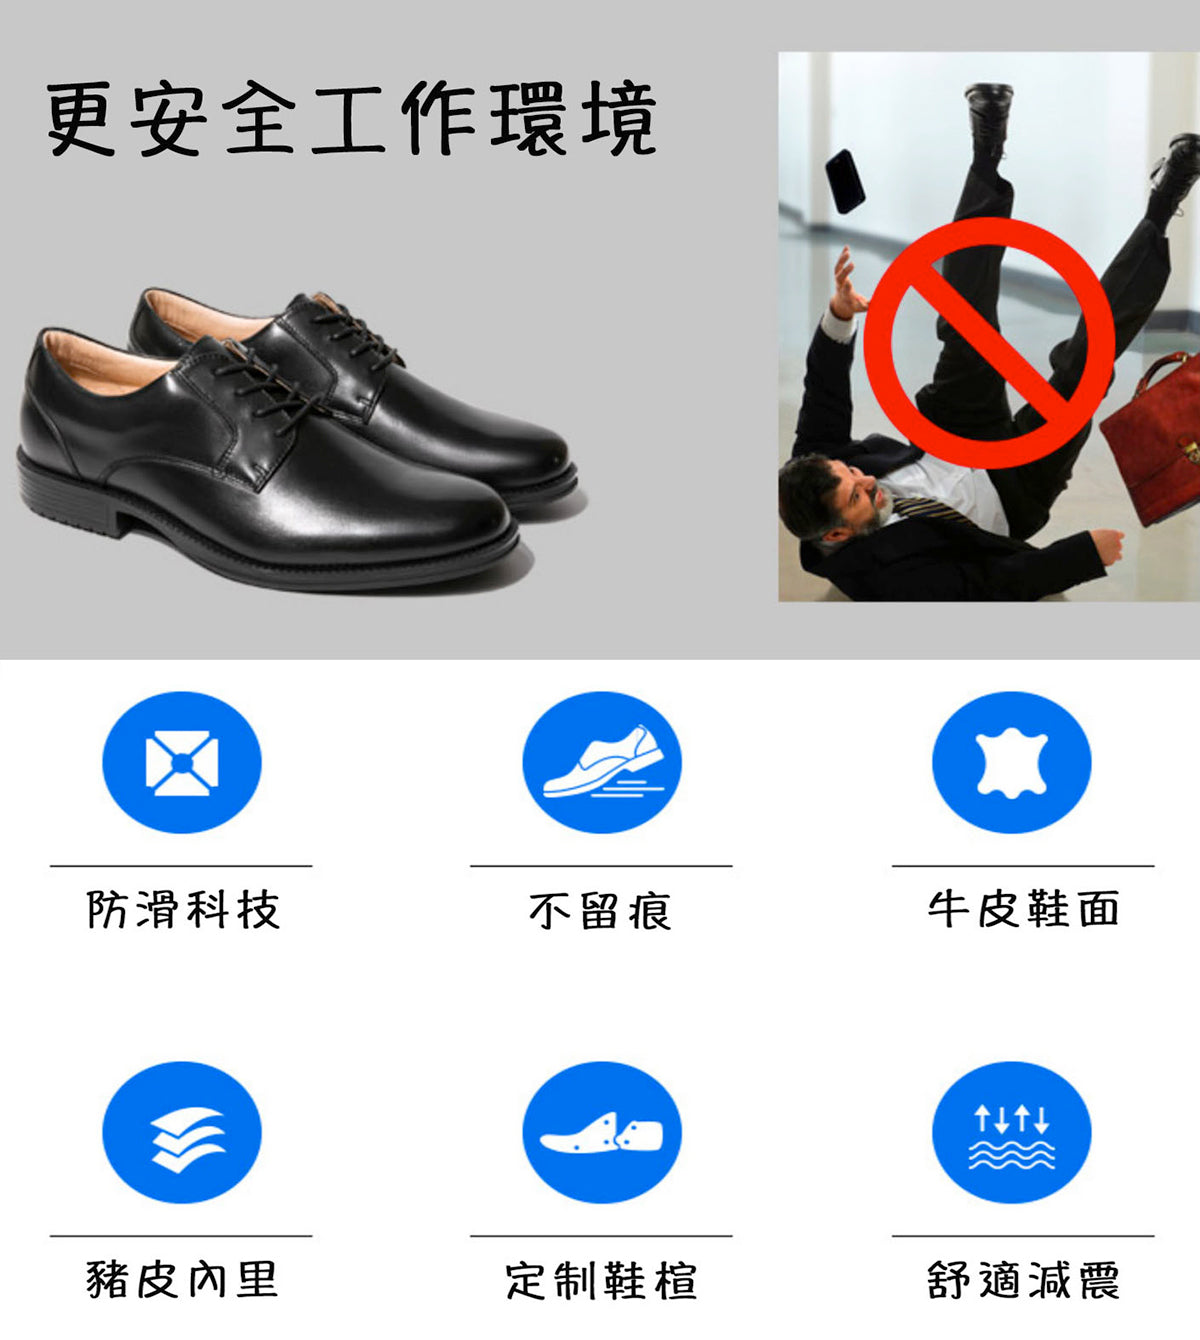 SAFE GRIP® 男西裝皮鞋